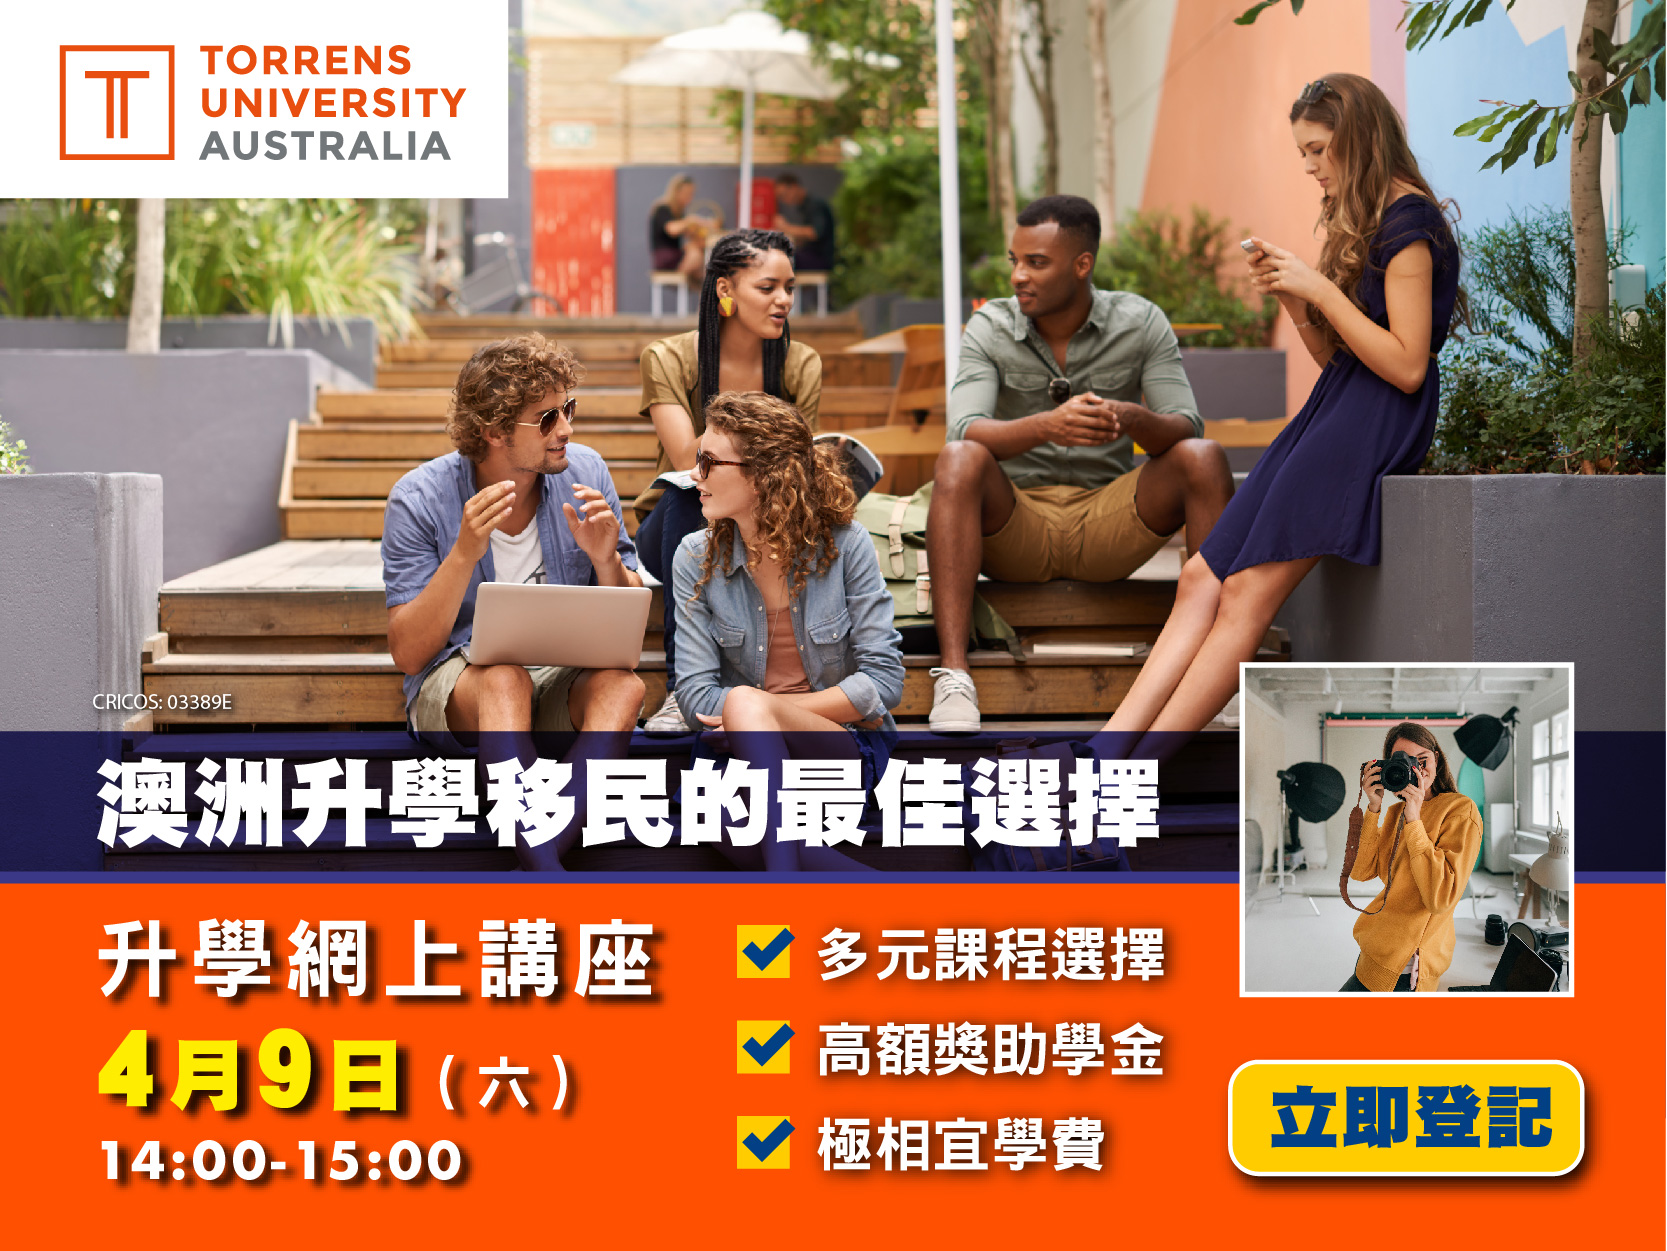 Torrens University Australia澳洲升學移民的最佳選擇